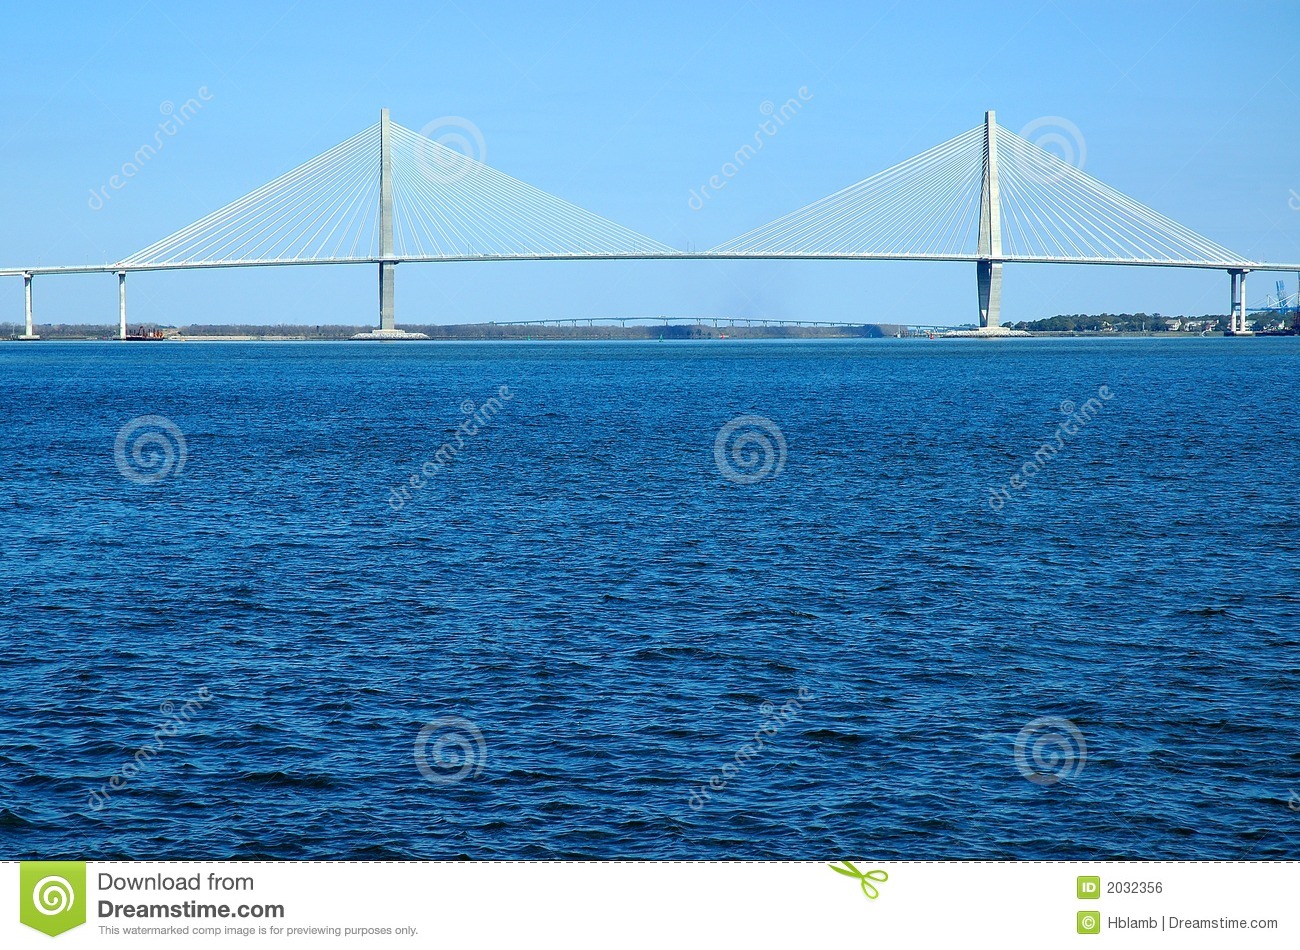 Suspension Bridge Over Water Royalty Free Stock Image   Image  2032356